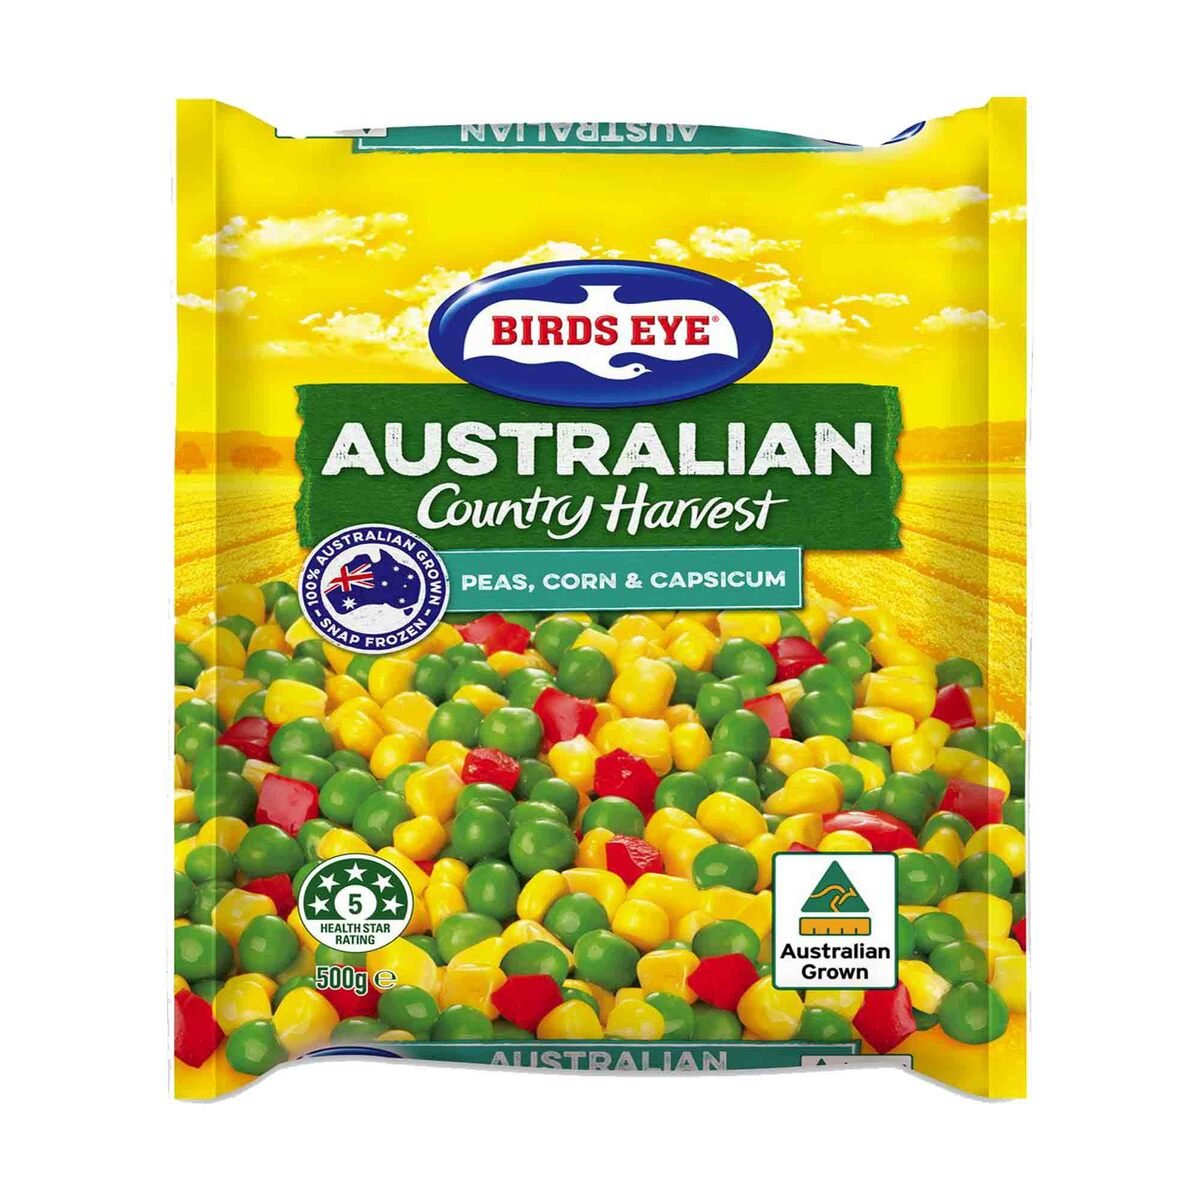 Birds Eye Australian Country Harvest Peas, Corn & Capsicum 500g